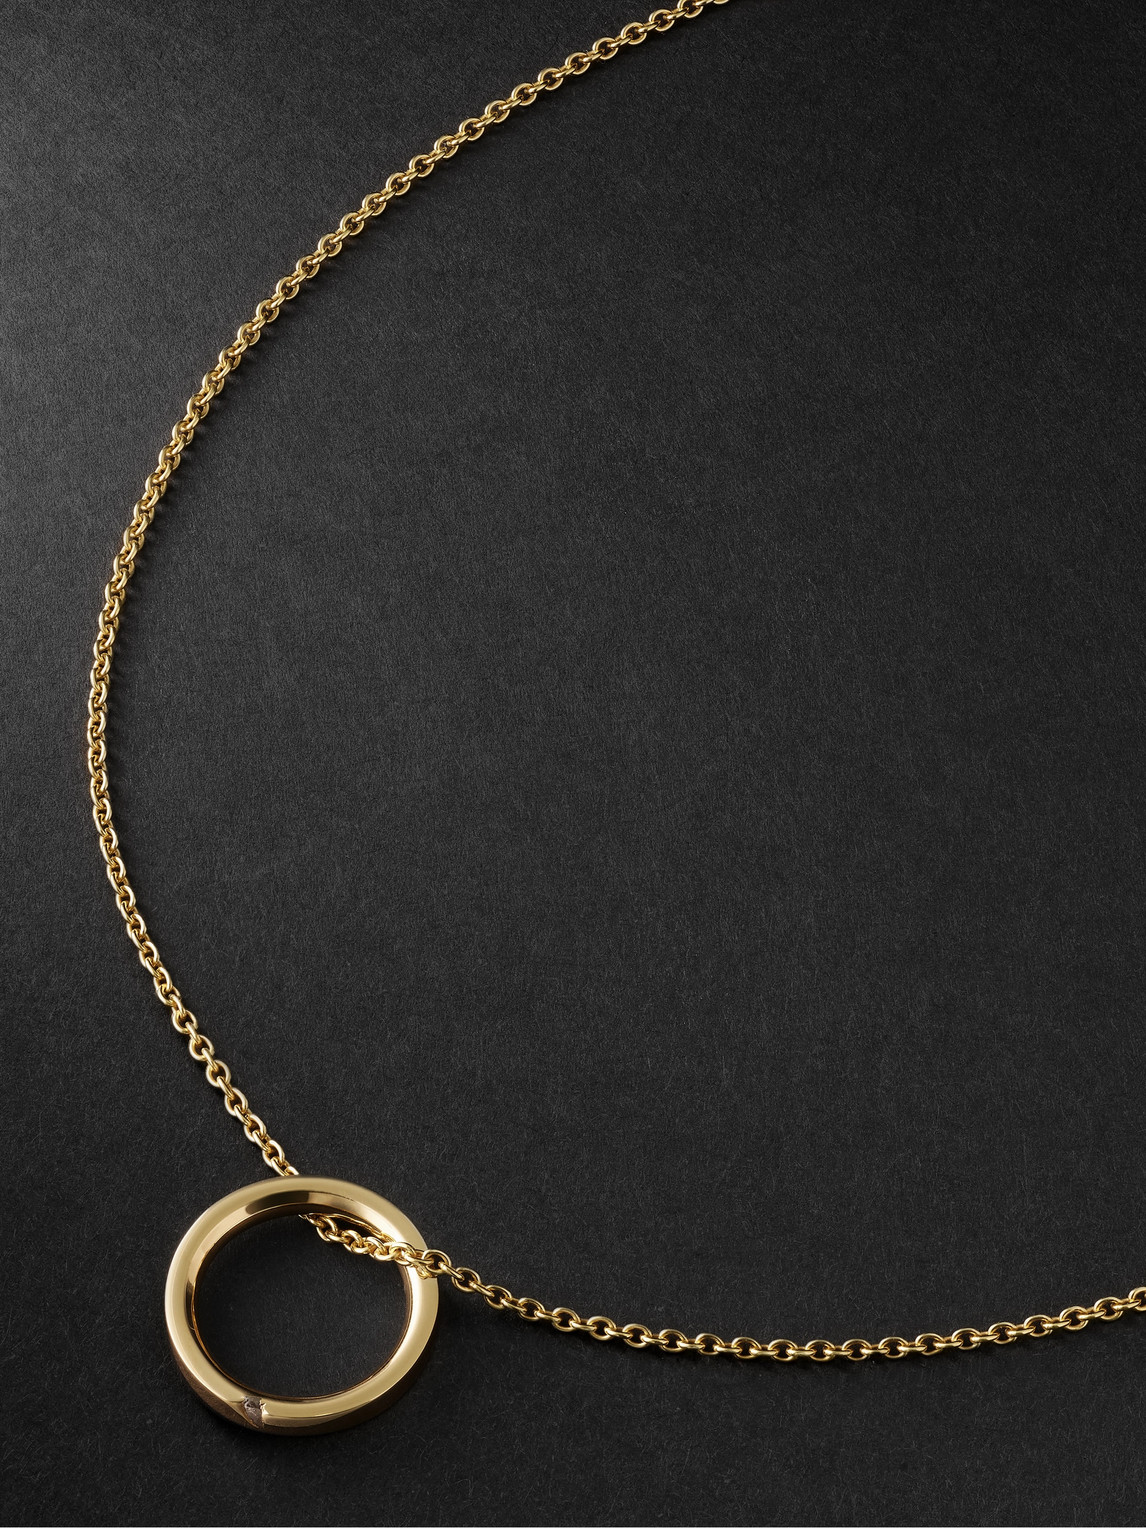 Alice Made This Ocean Diamonds Bancroft 9-karat Gold Diamond Pendant Necklace